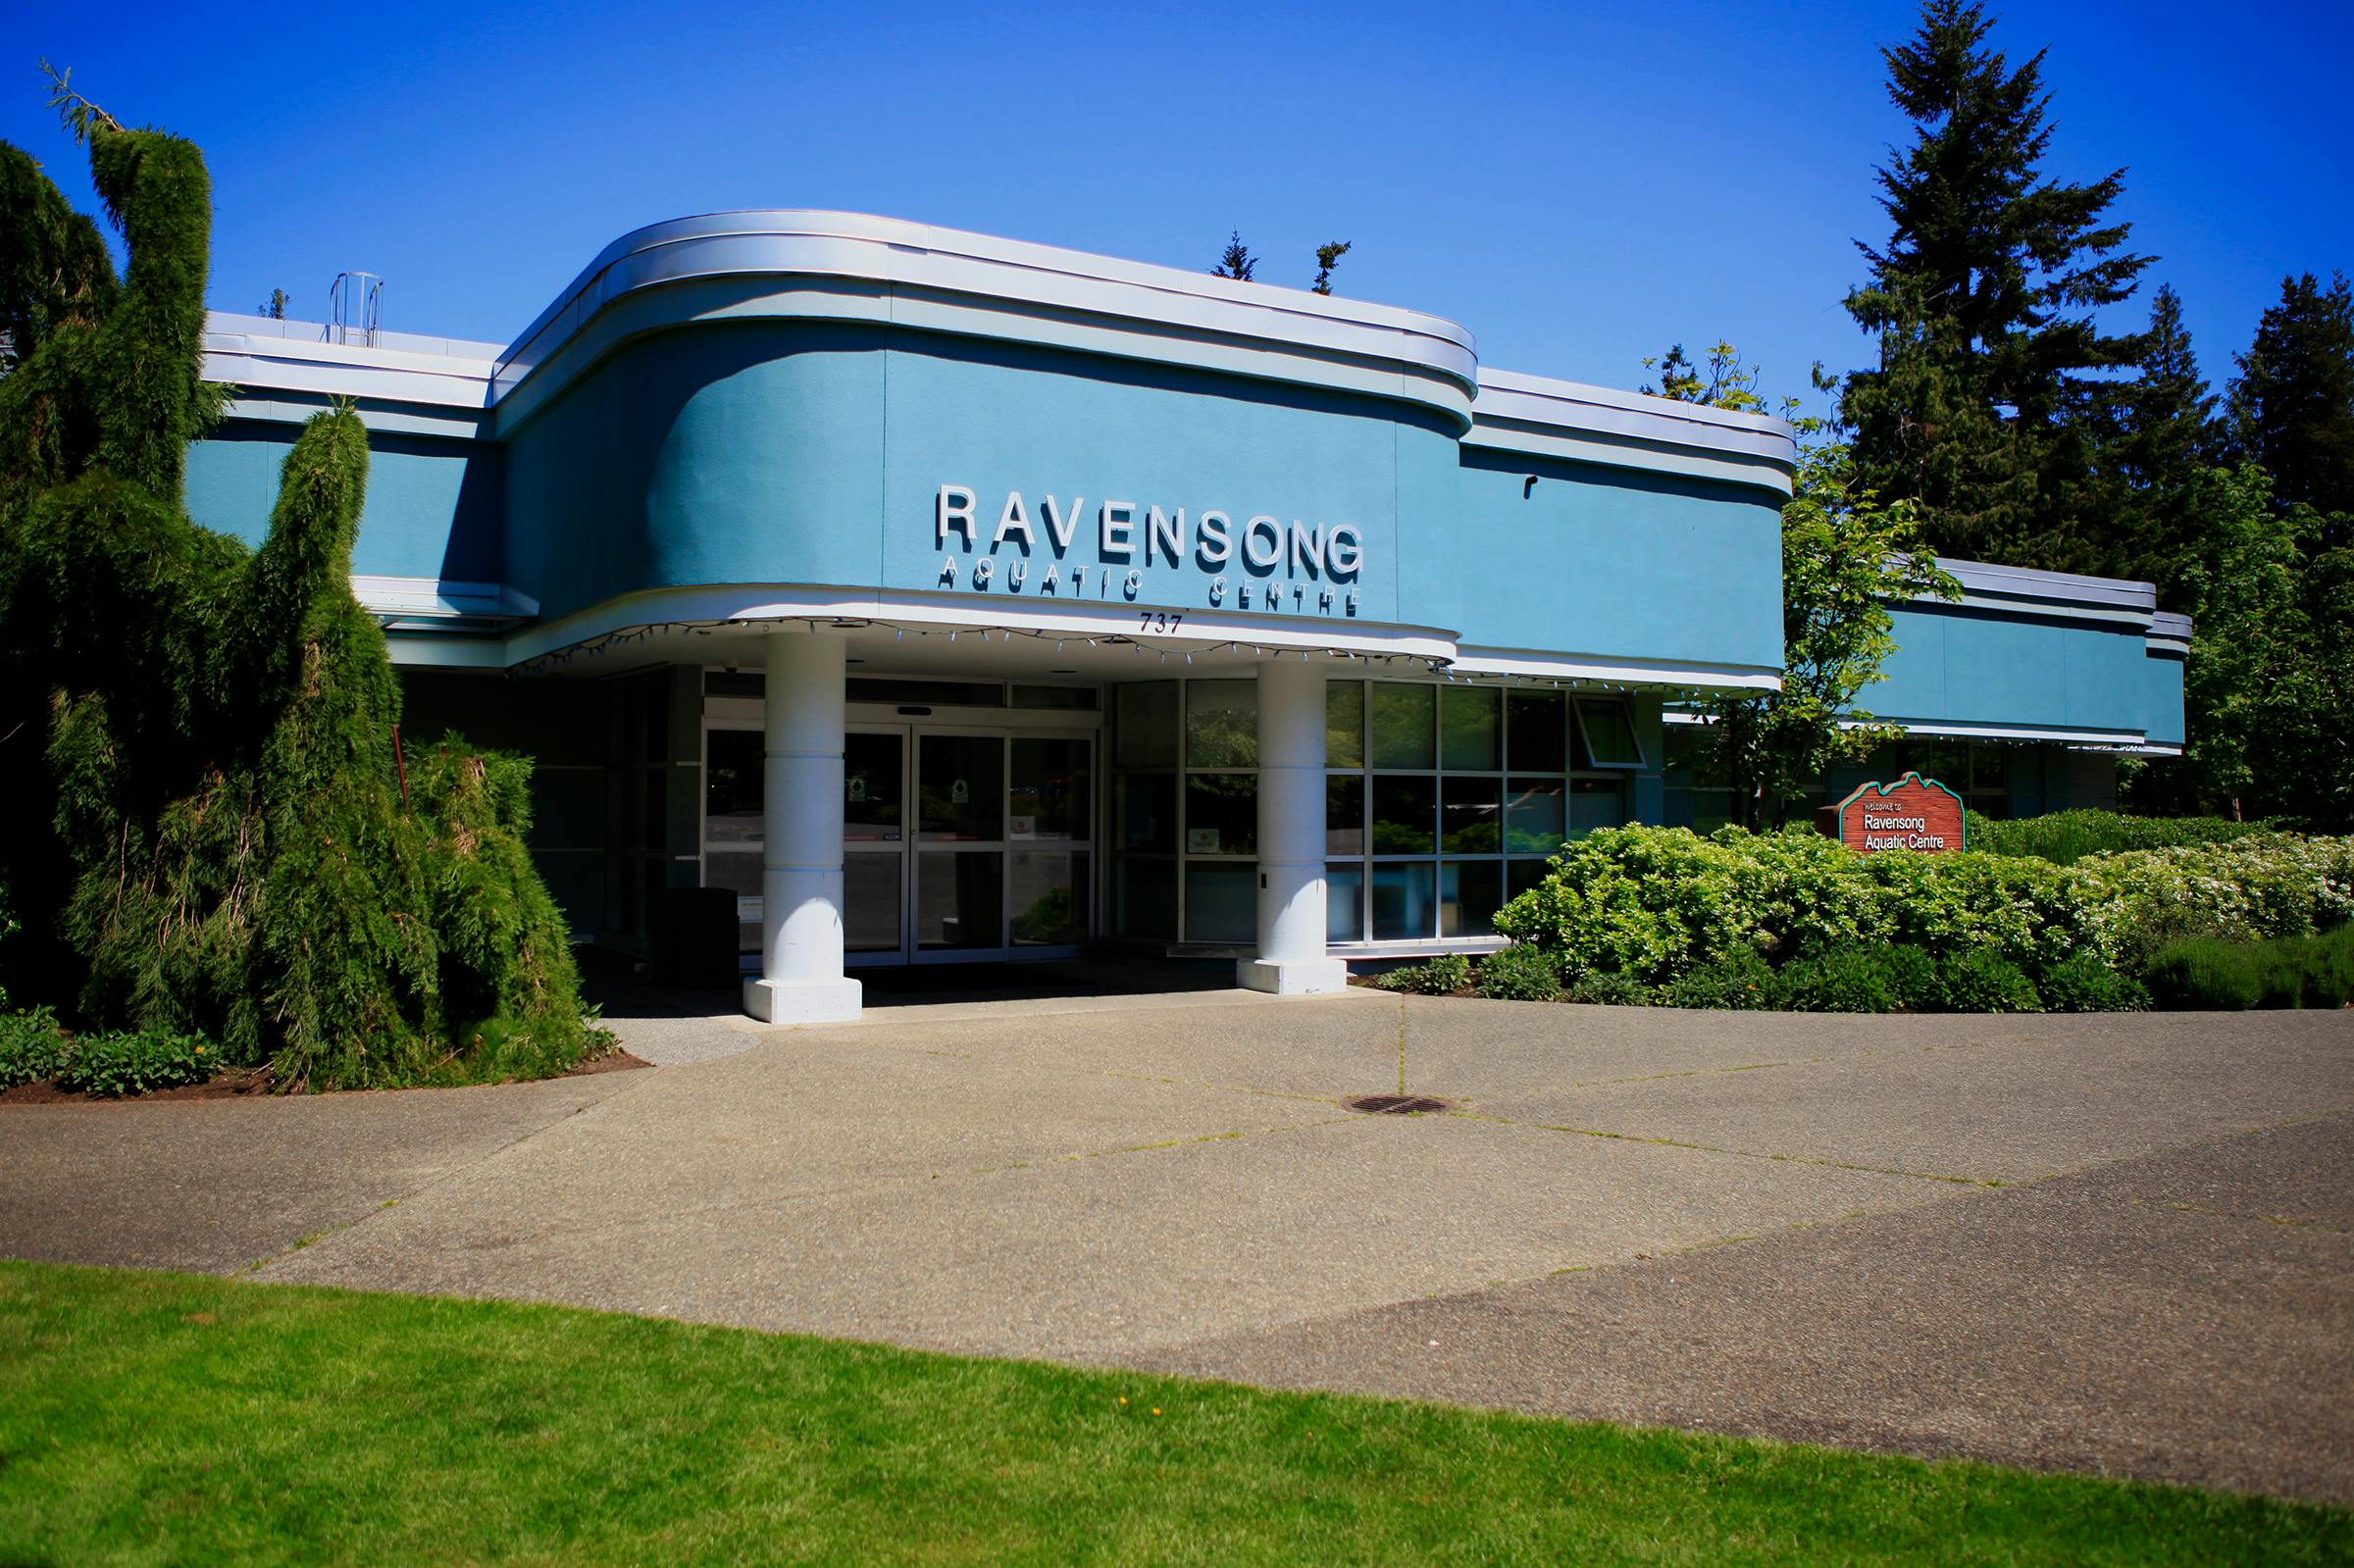 Ravensong Aquatic Centre Existing Exterior